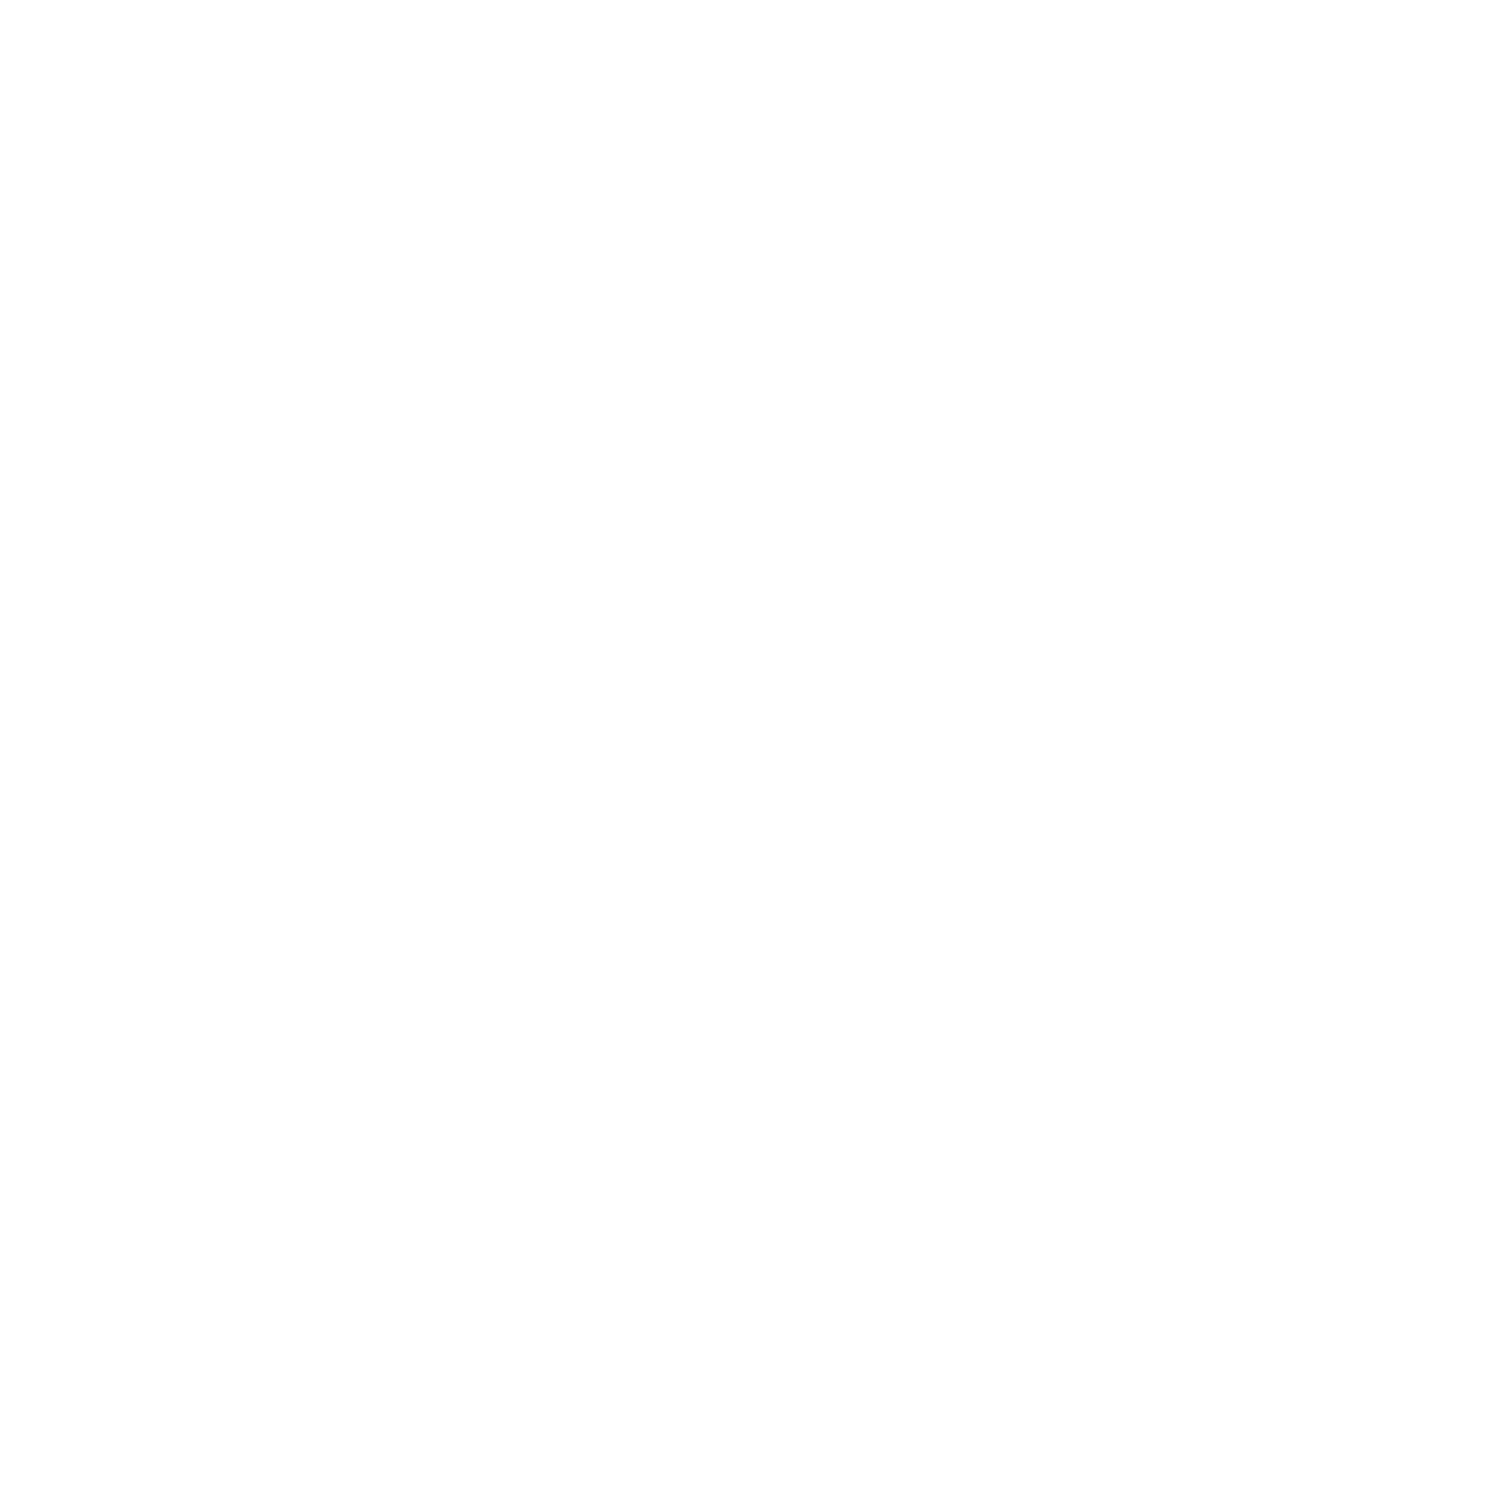 Skull and Bones Society